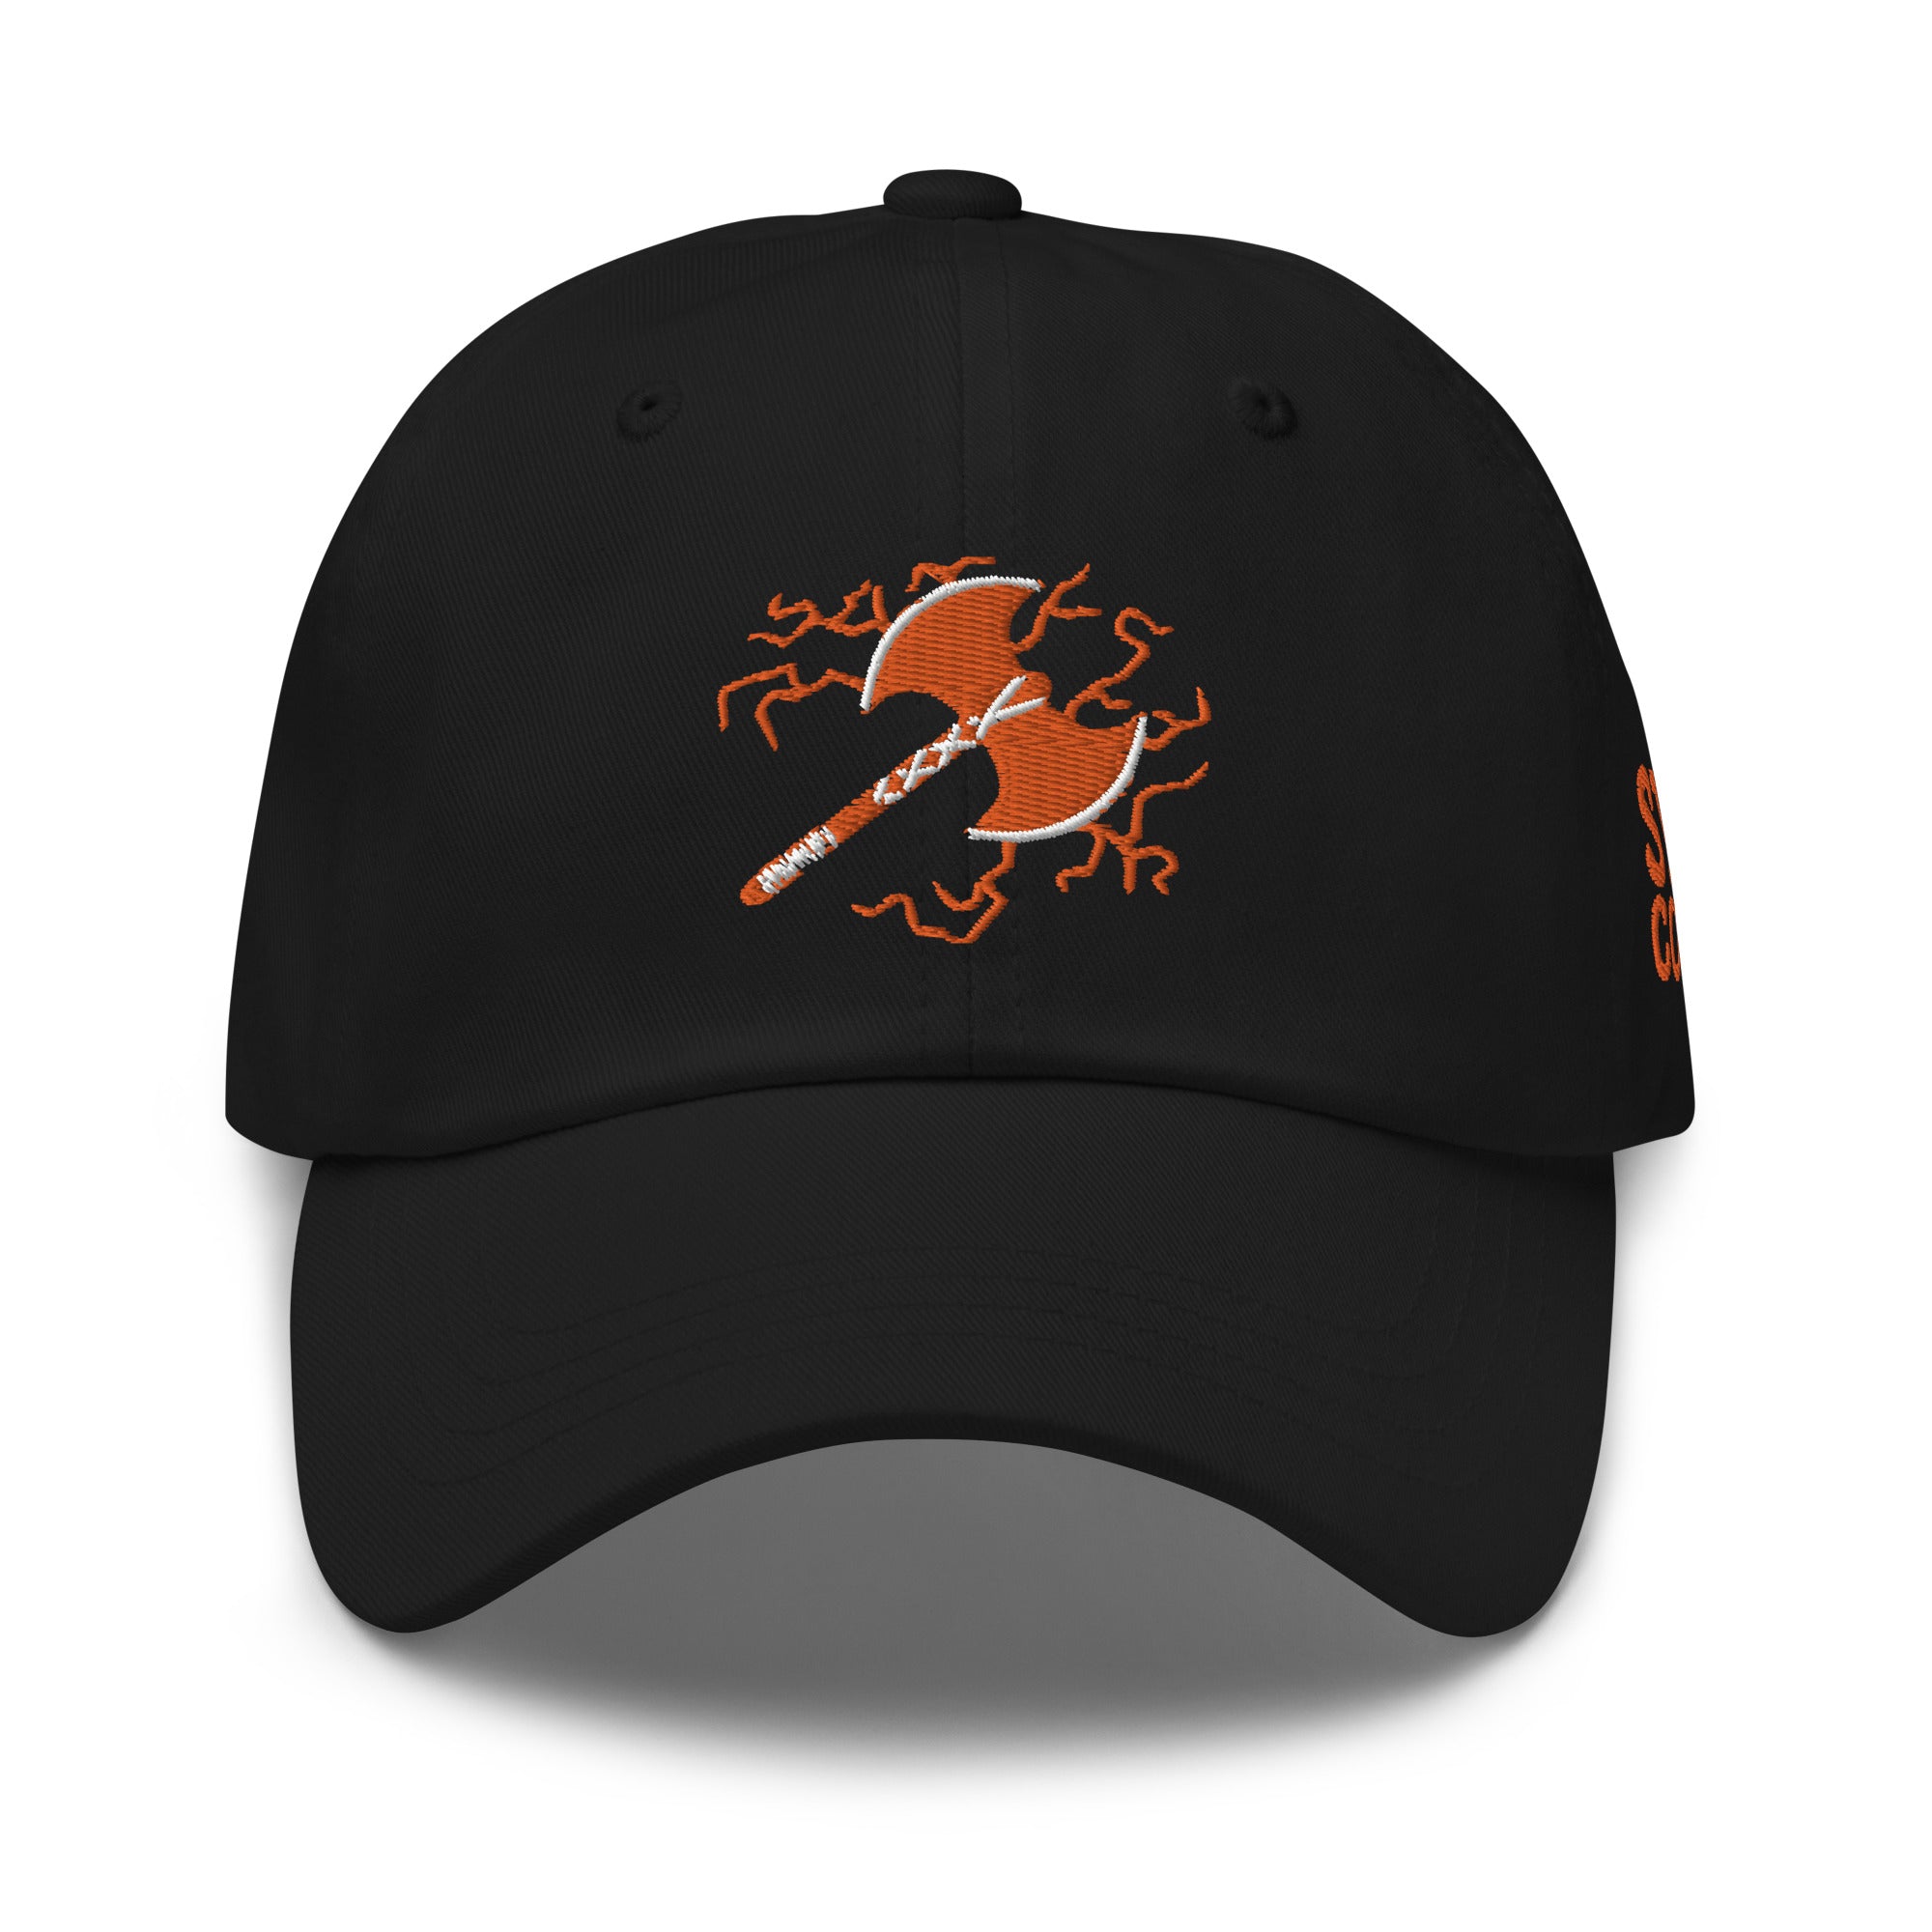 Storm Company in Orange Dad hat